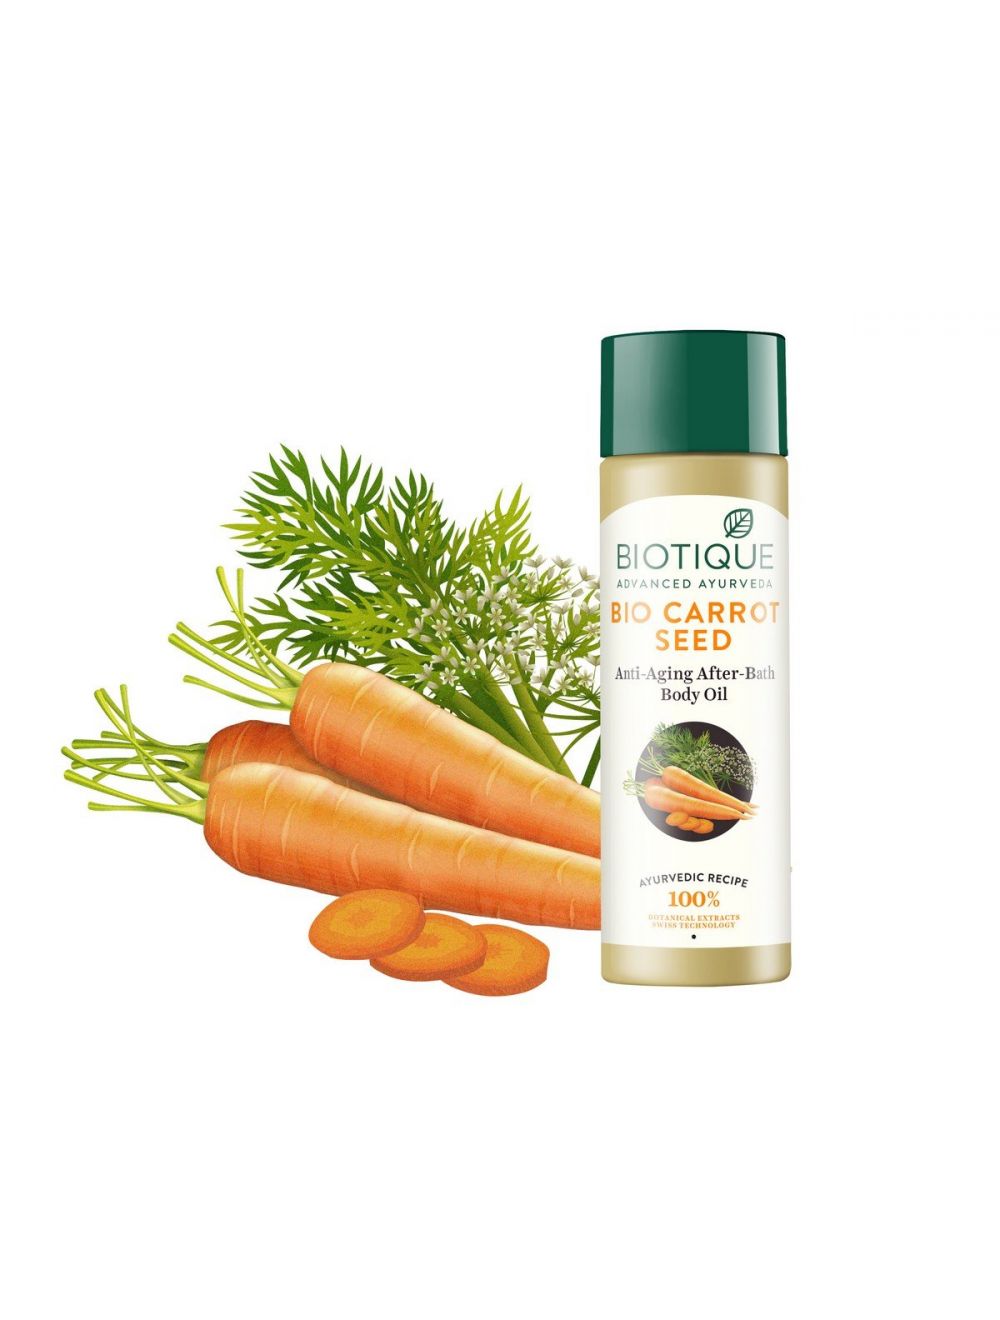 Biotique Bio Carrot Seed Anti-Aging After-Bath Body Oil (120ml) - Niram